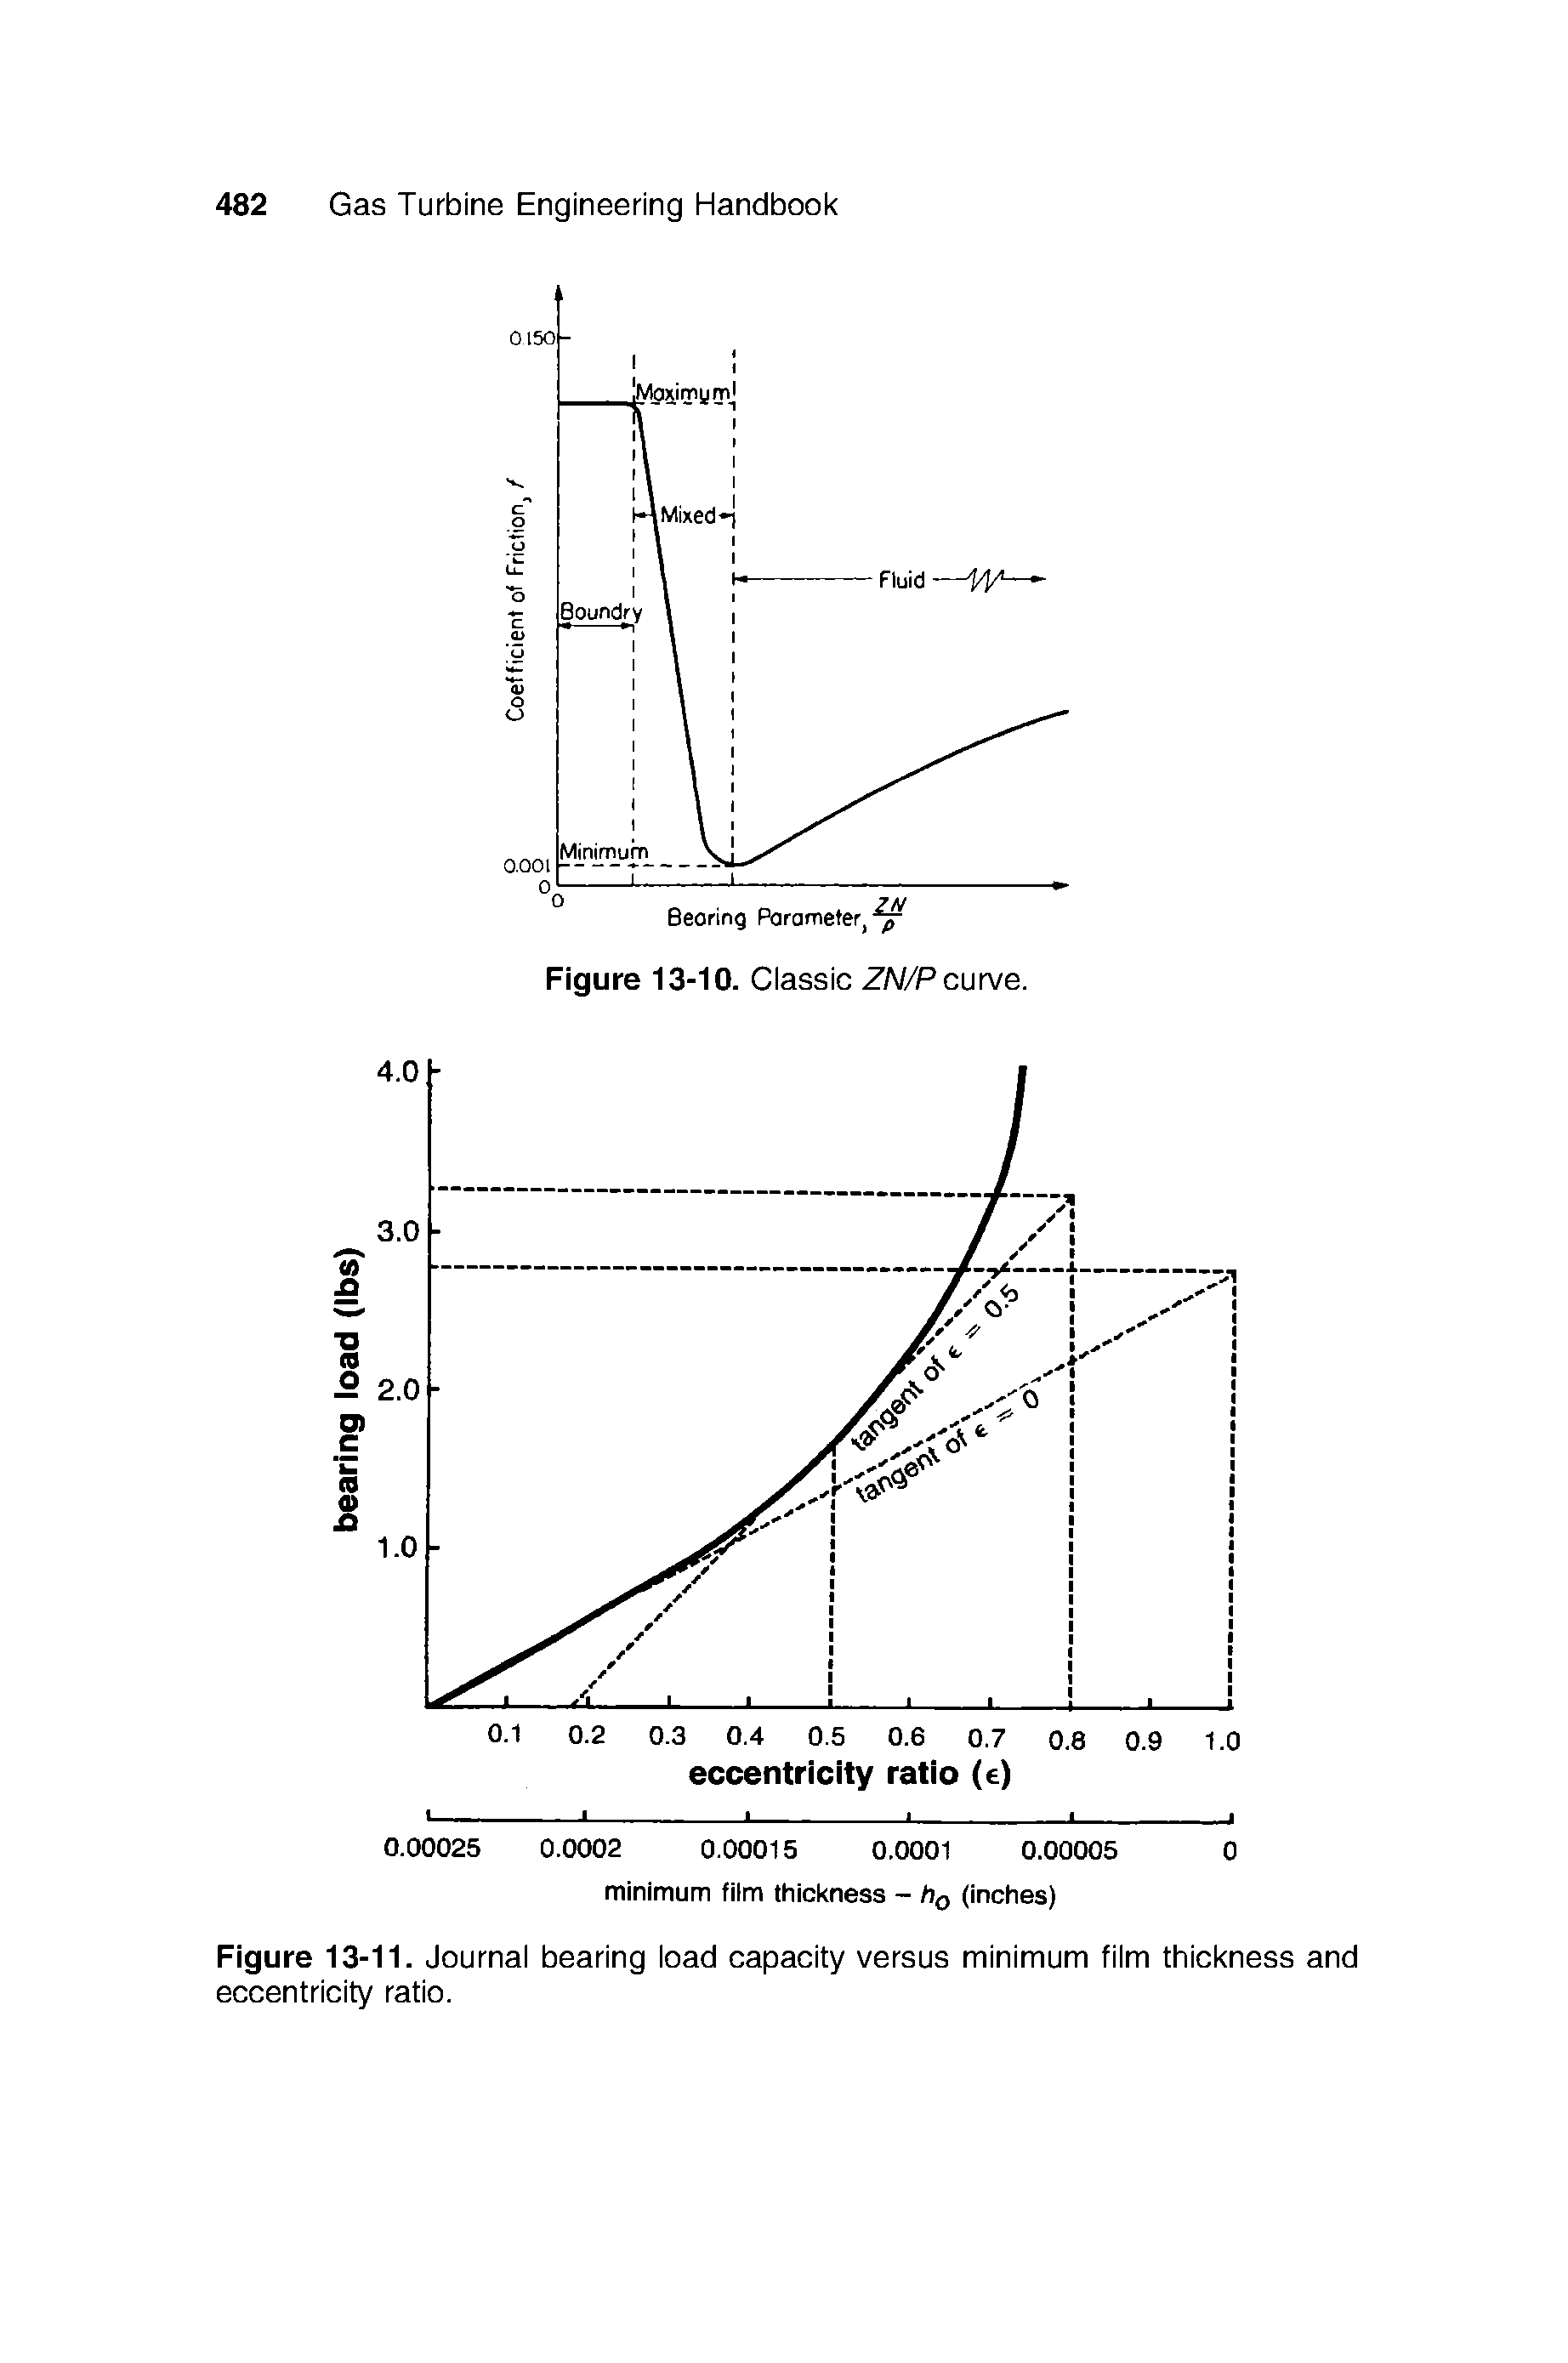 Figure 13-11. Journal bearing load capacity versus minimum film thickness and eeeentrieity ratio.